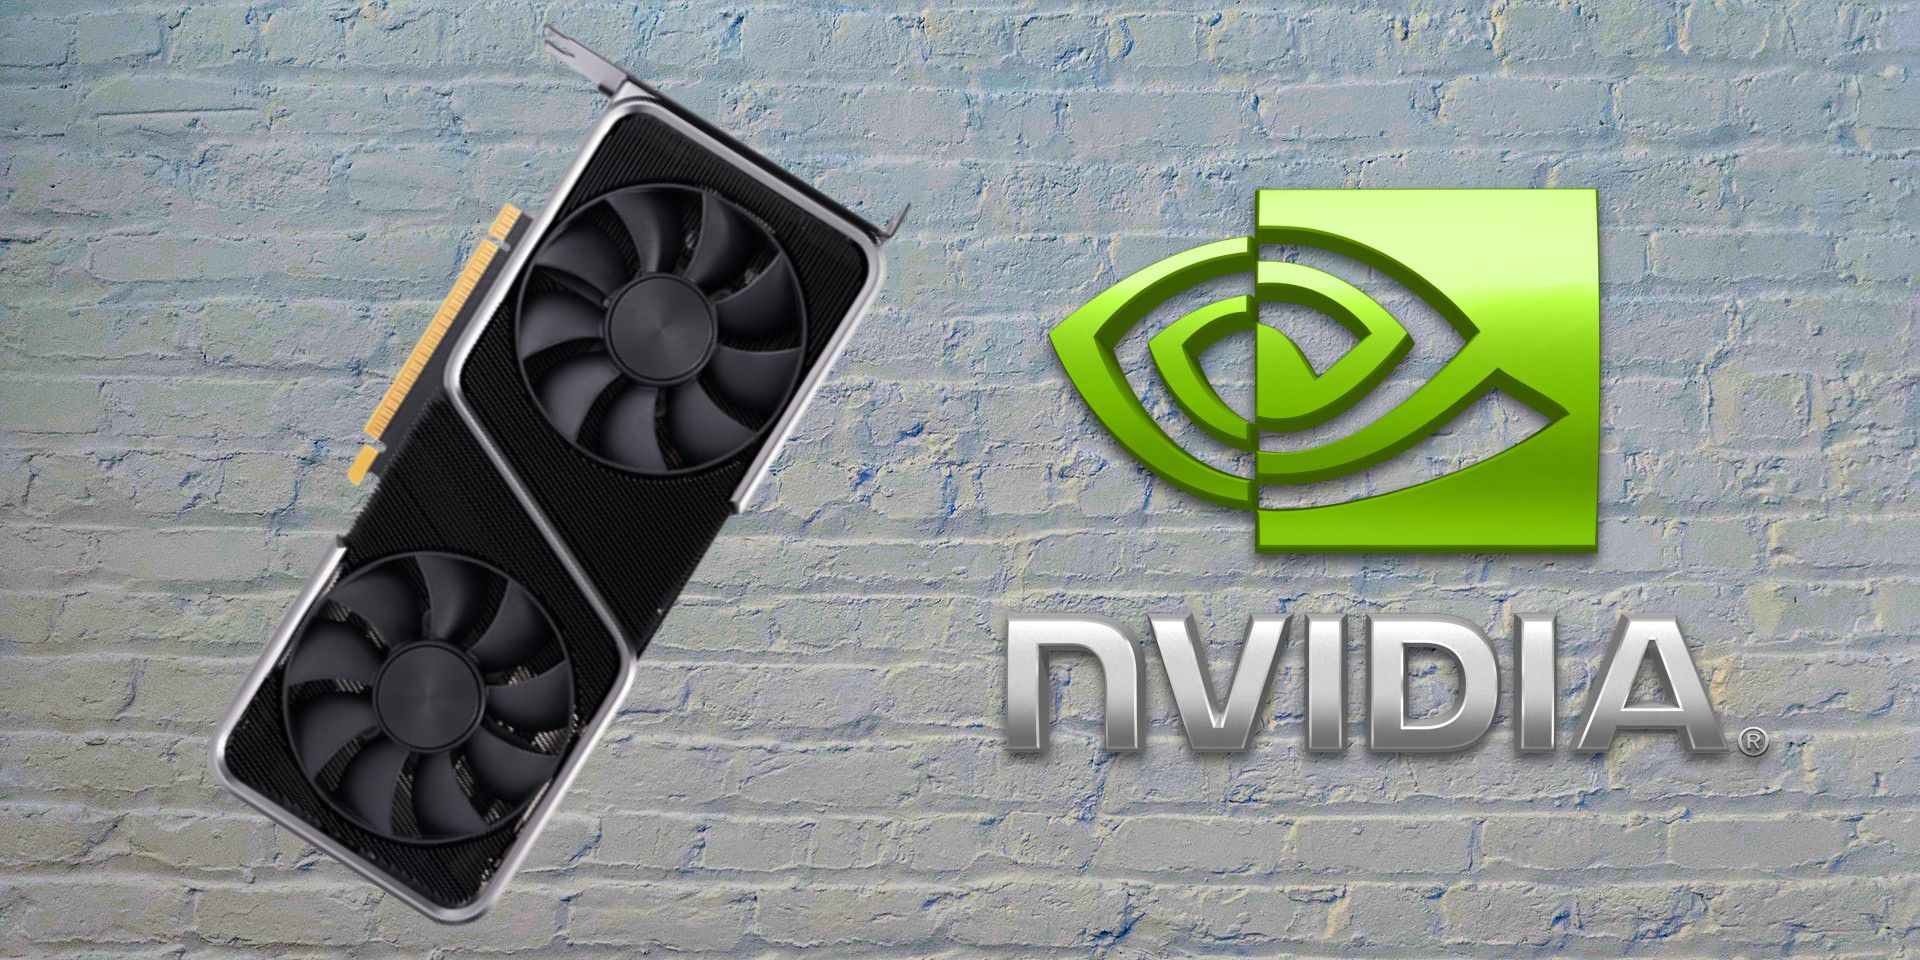 Nvidia card and logo